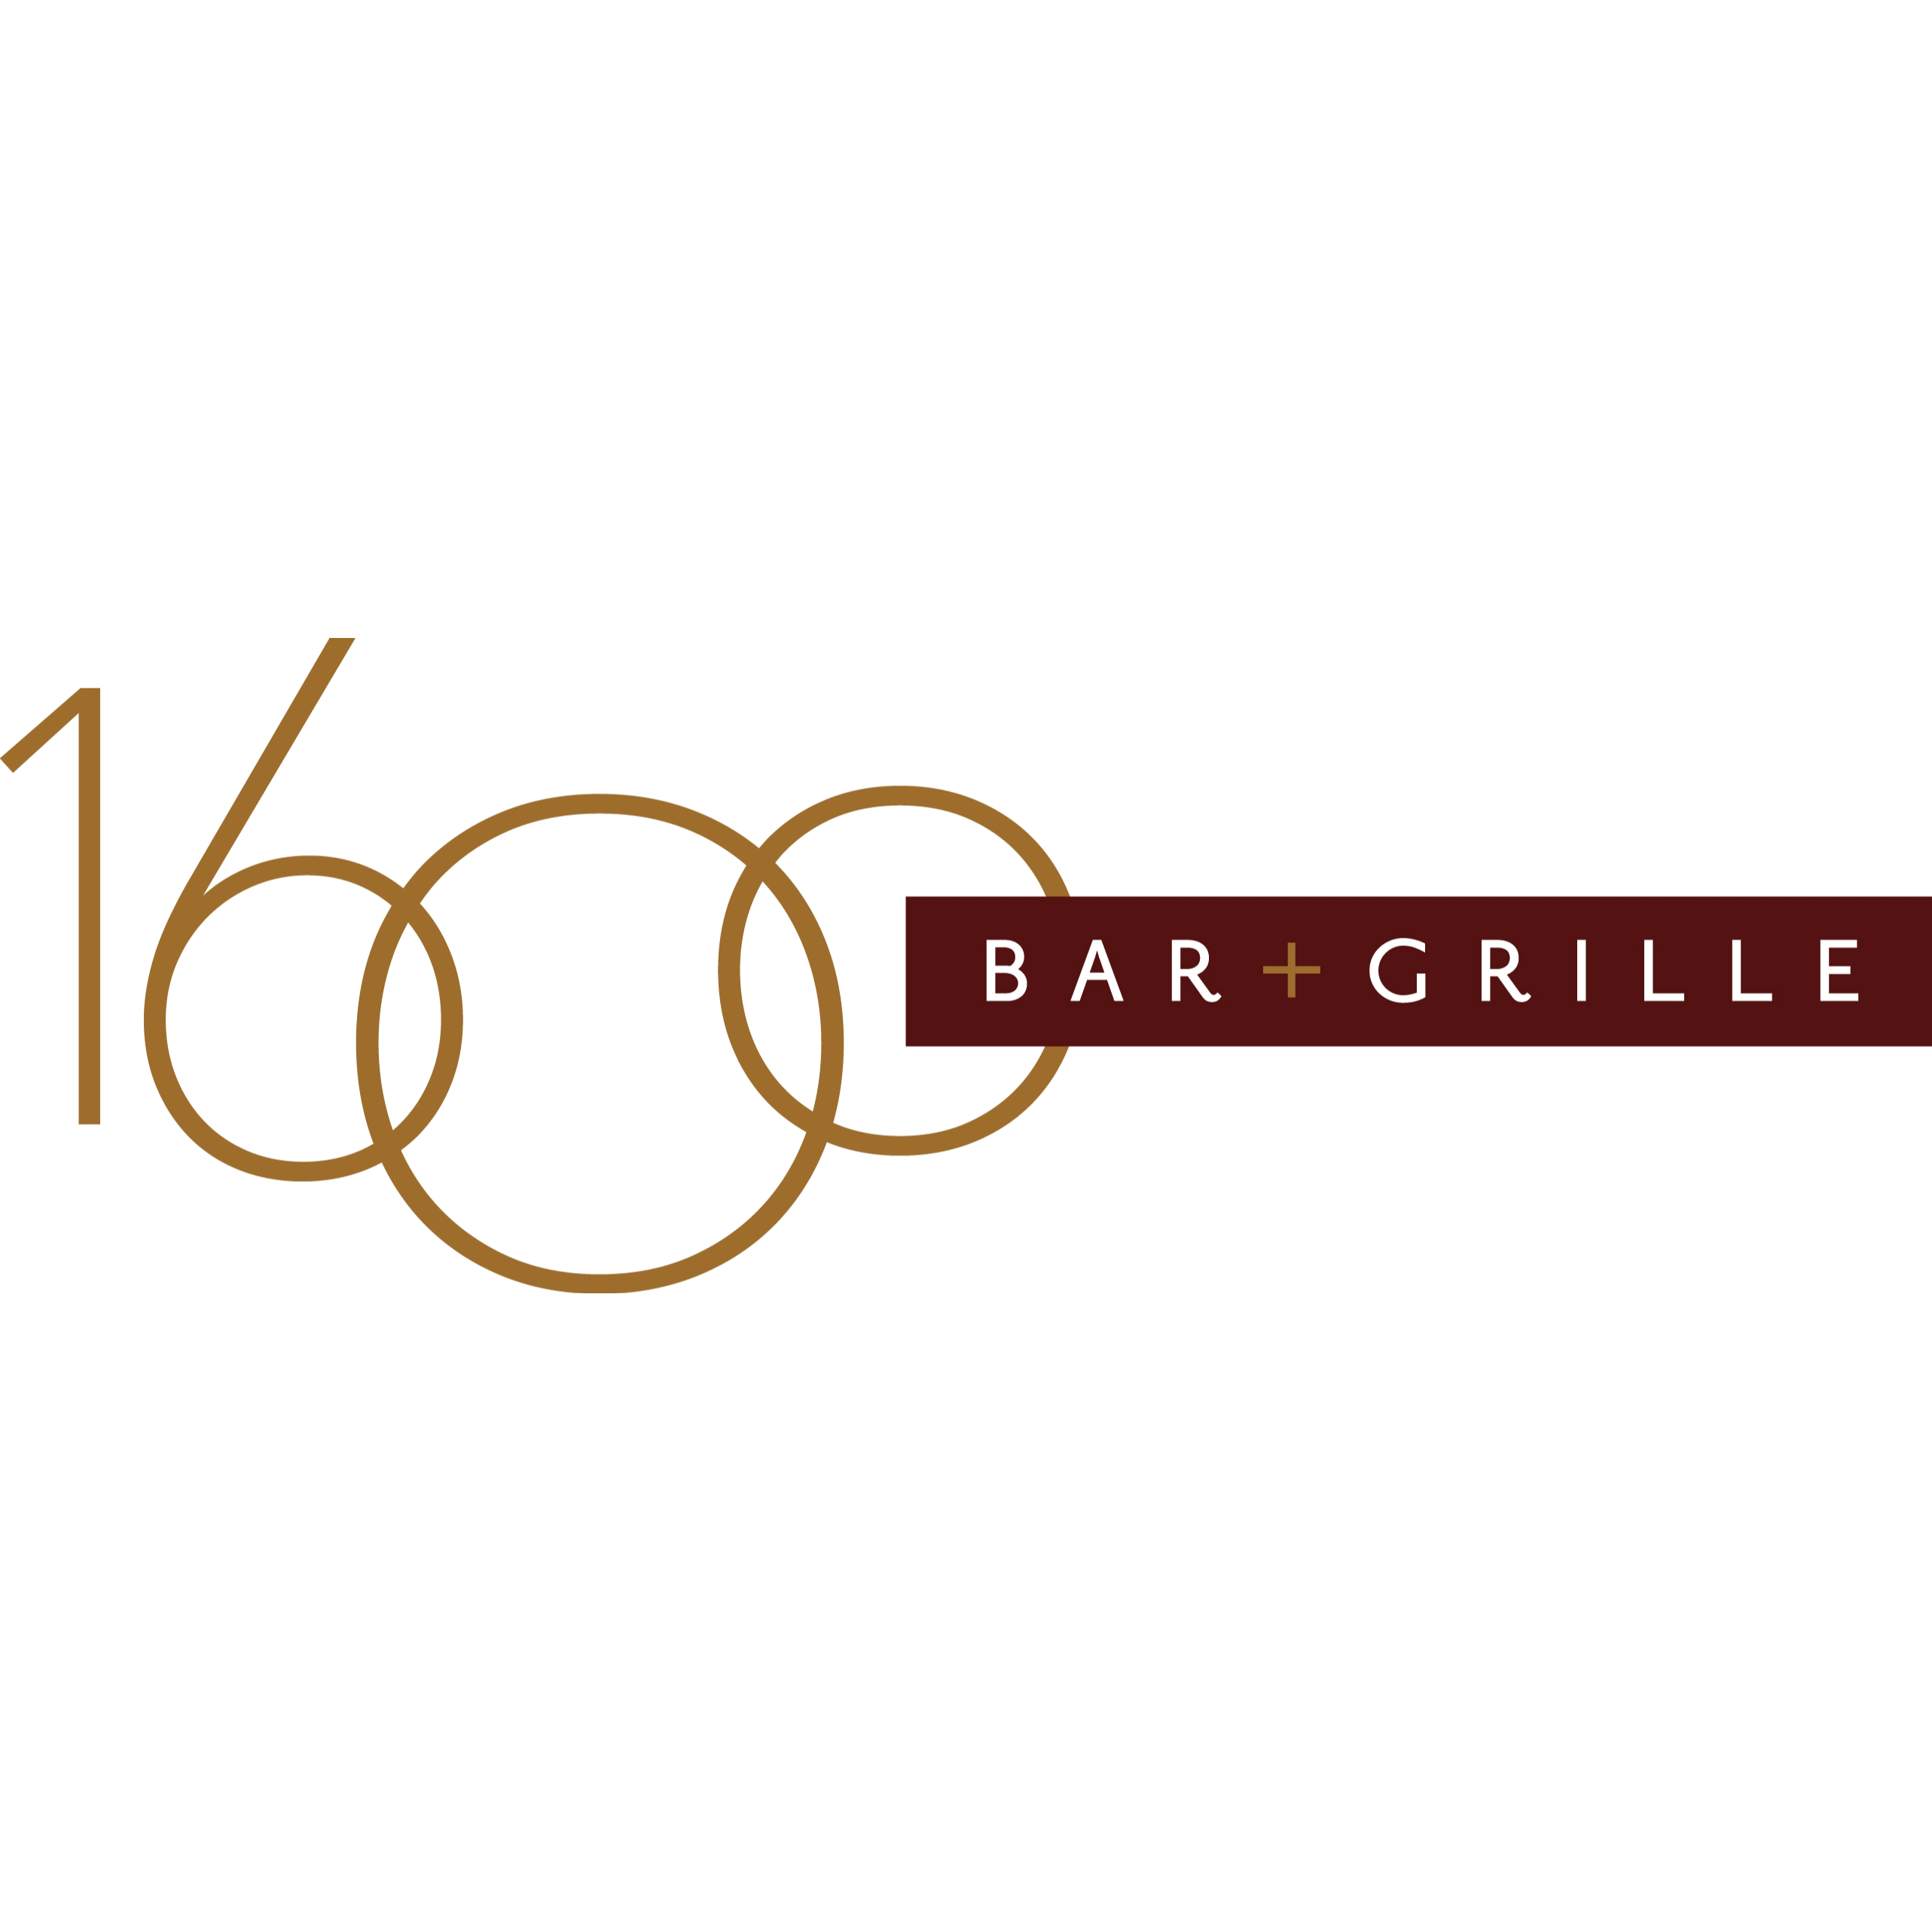 1600 Bar + Grille - Houston, TX 77010 - (713)577-6115 | ShowMeLocal.com